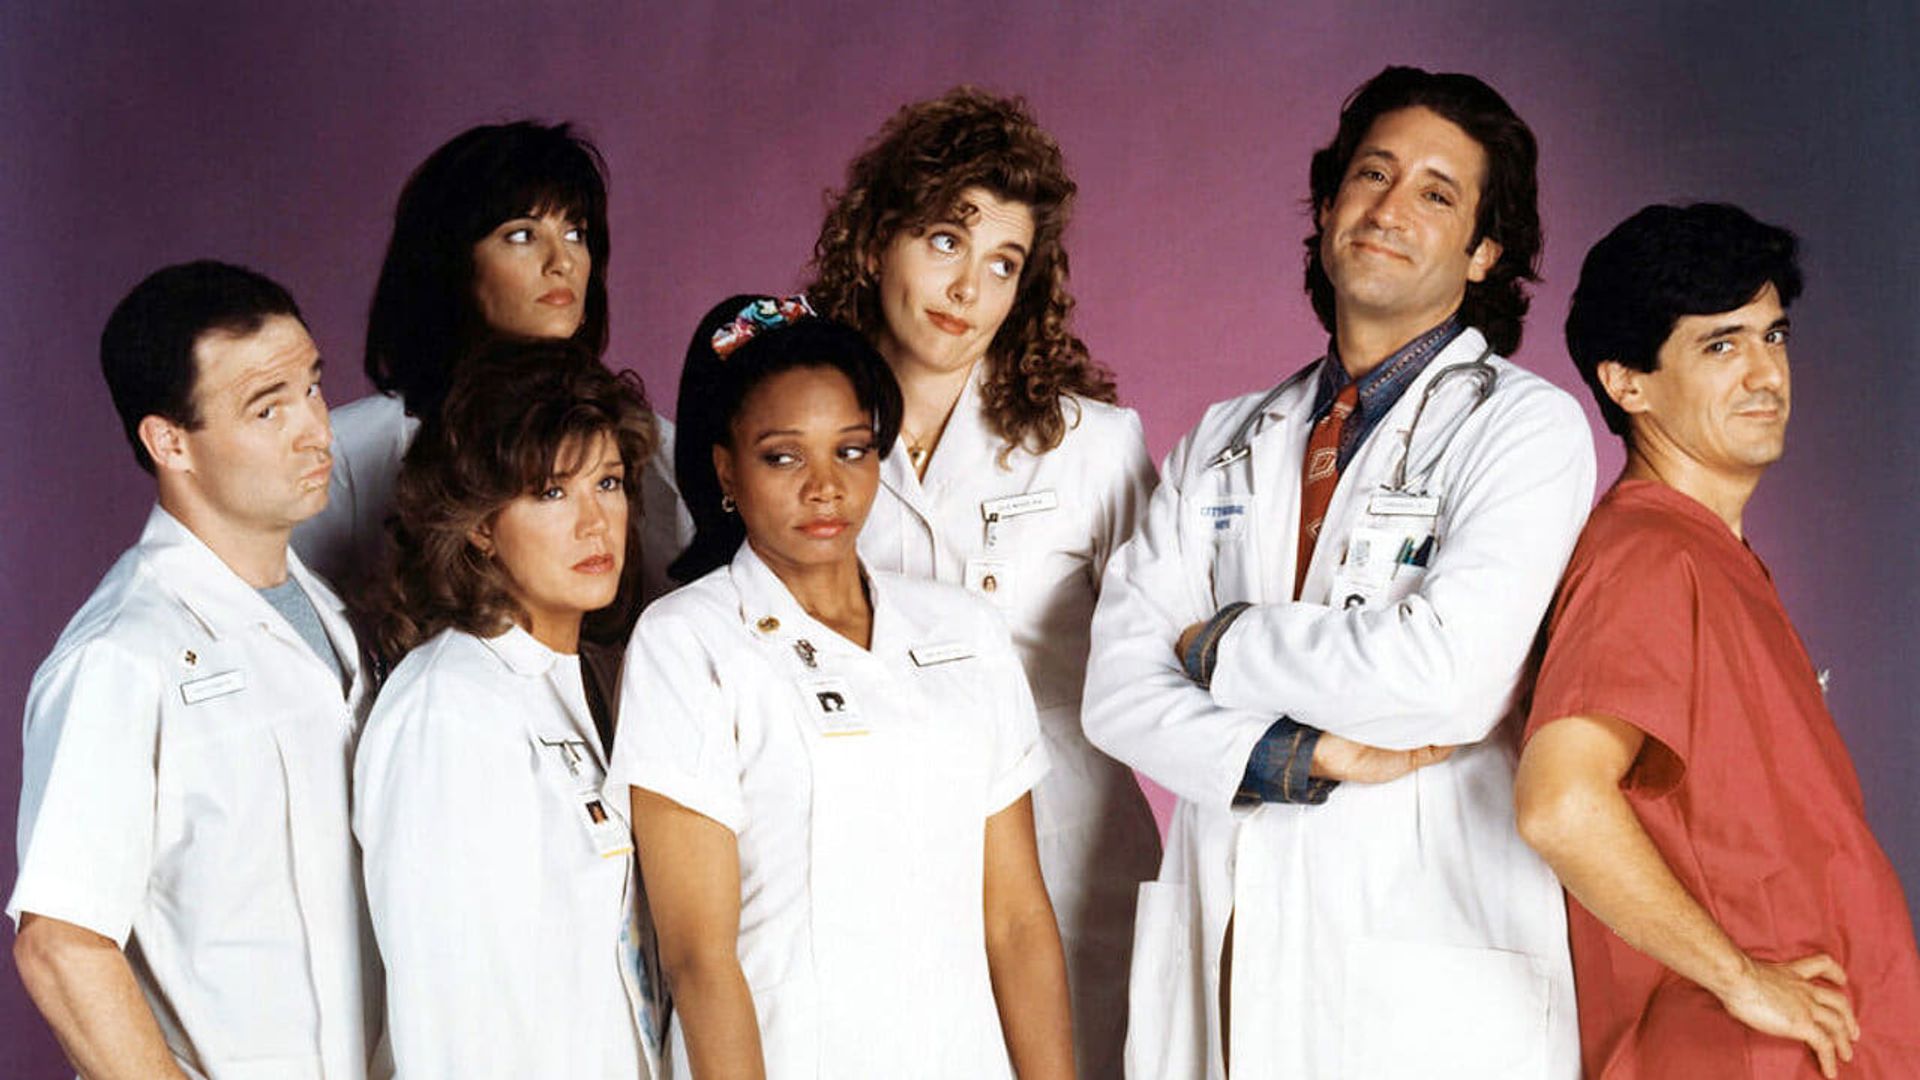 Nurses background